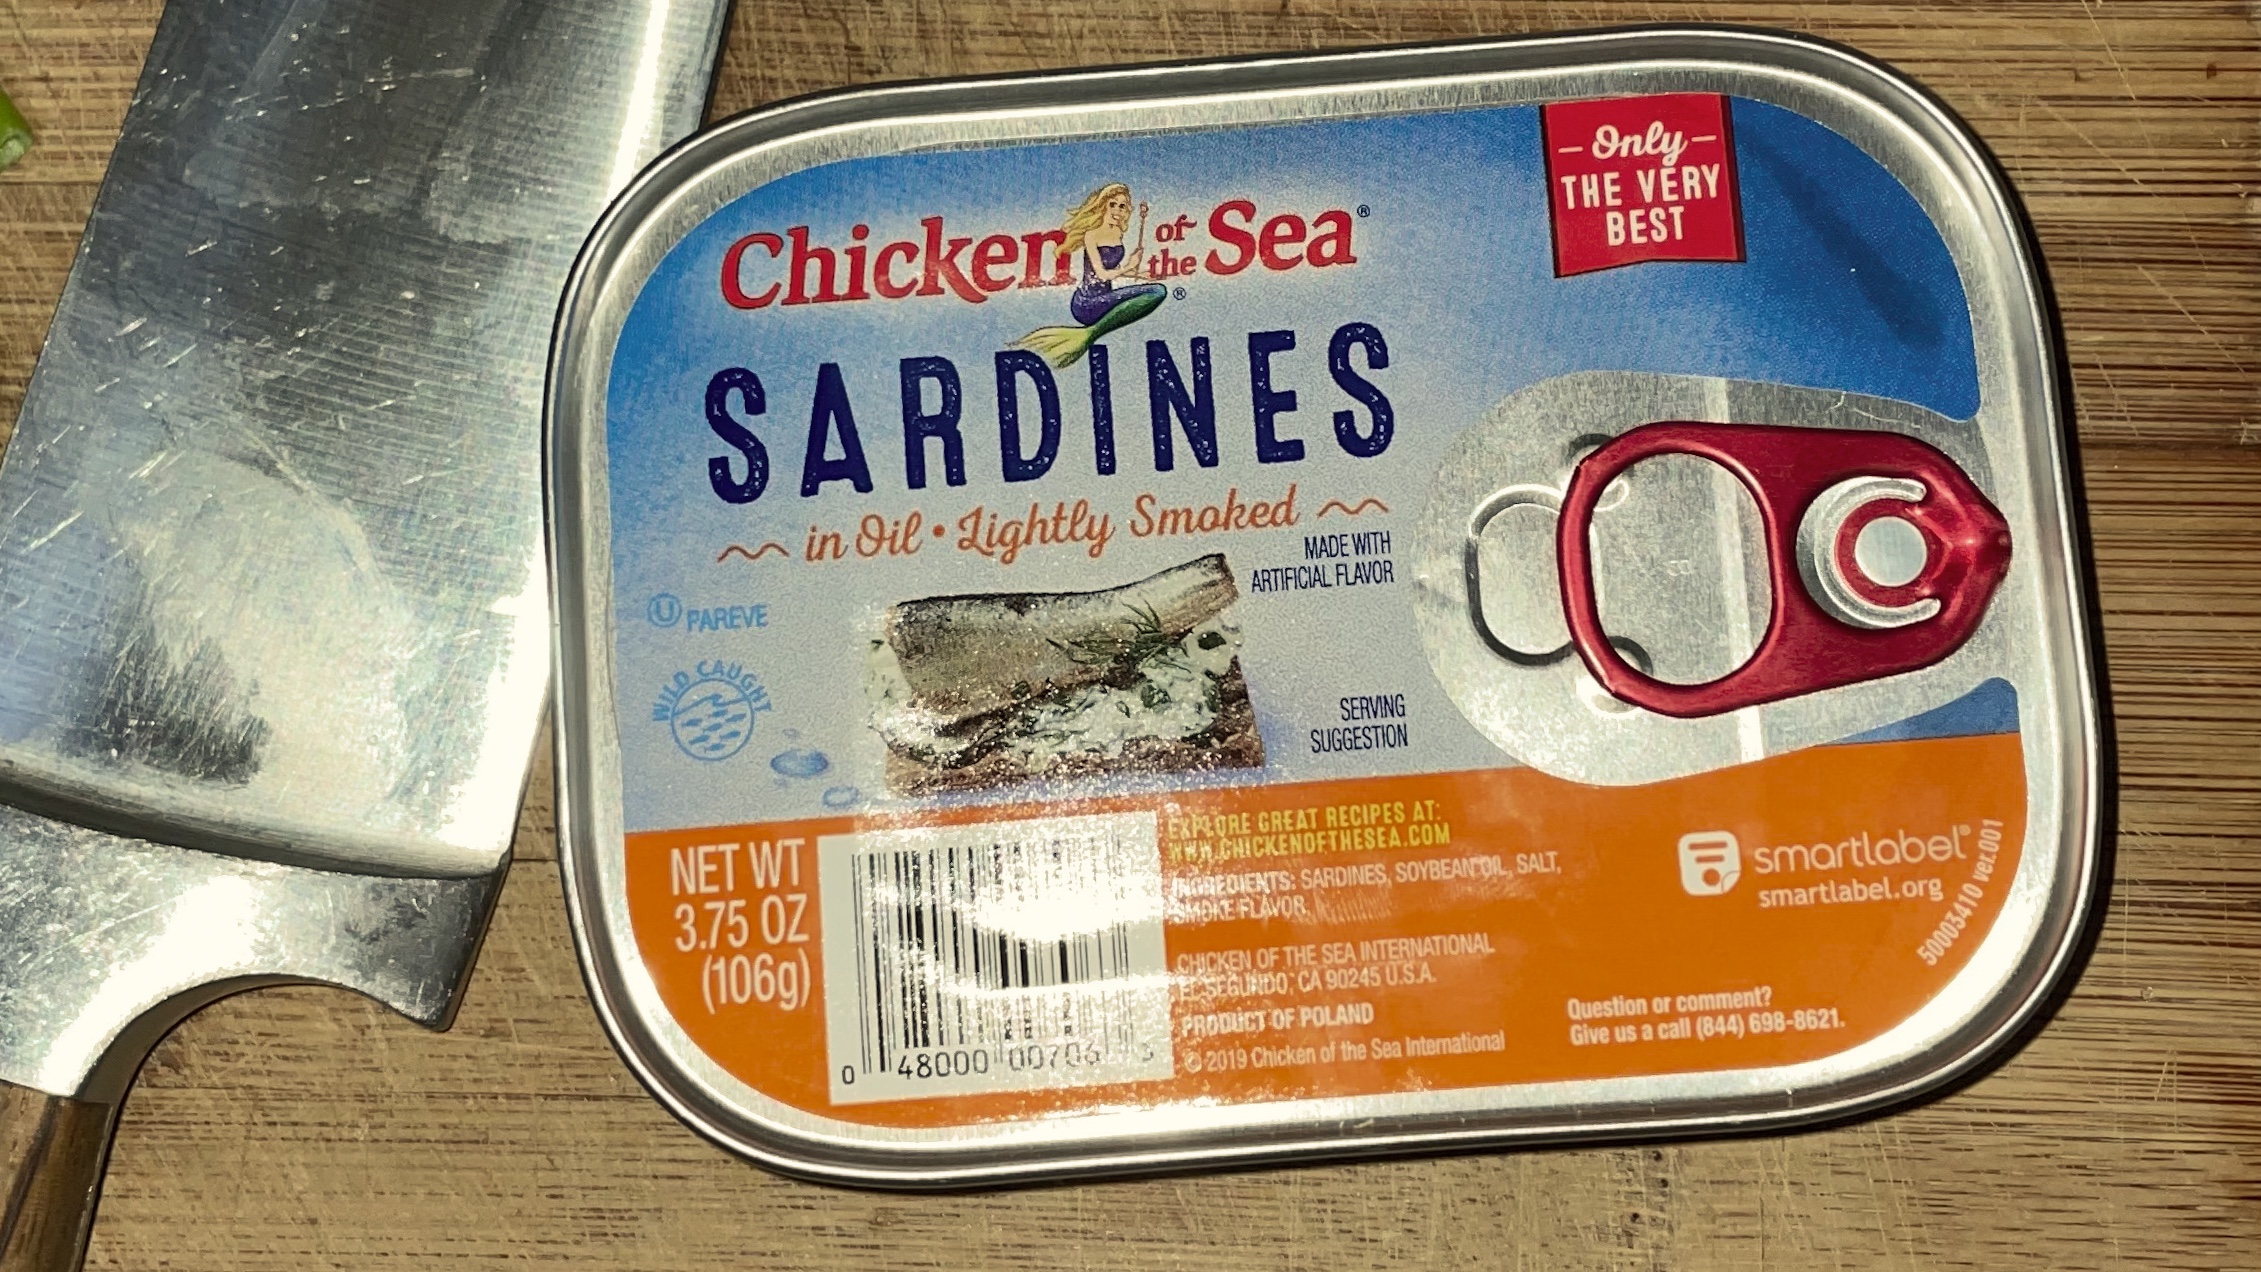 The Sardine Sandwich or Filling or Salad